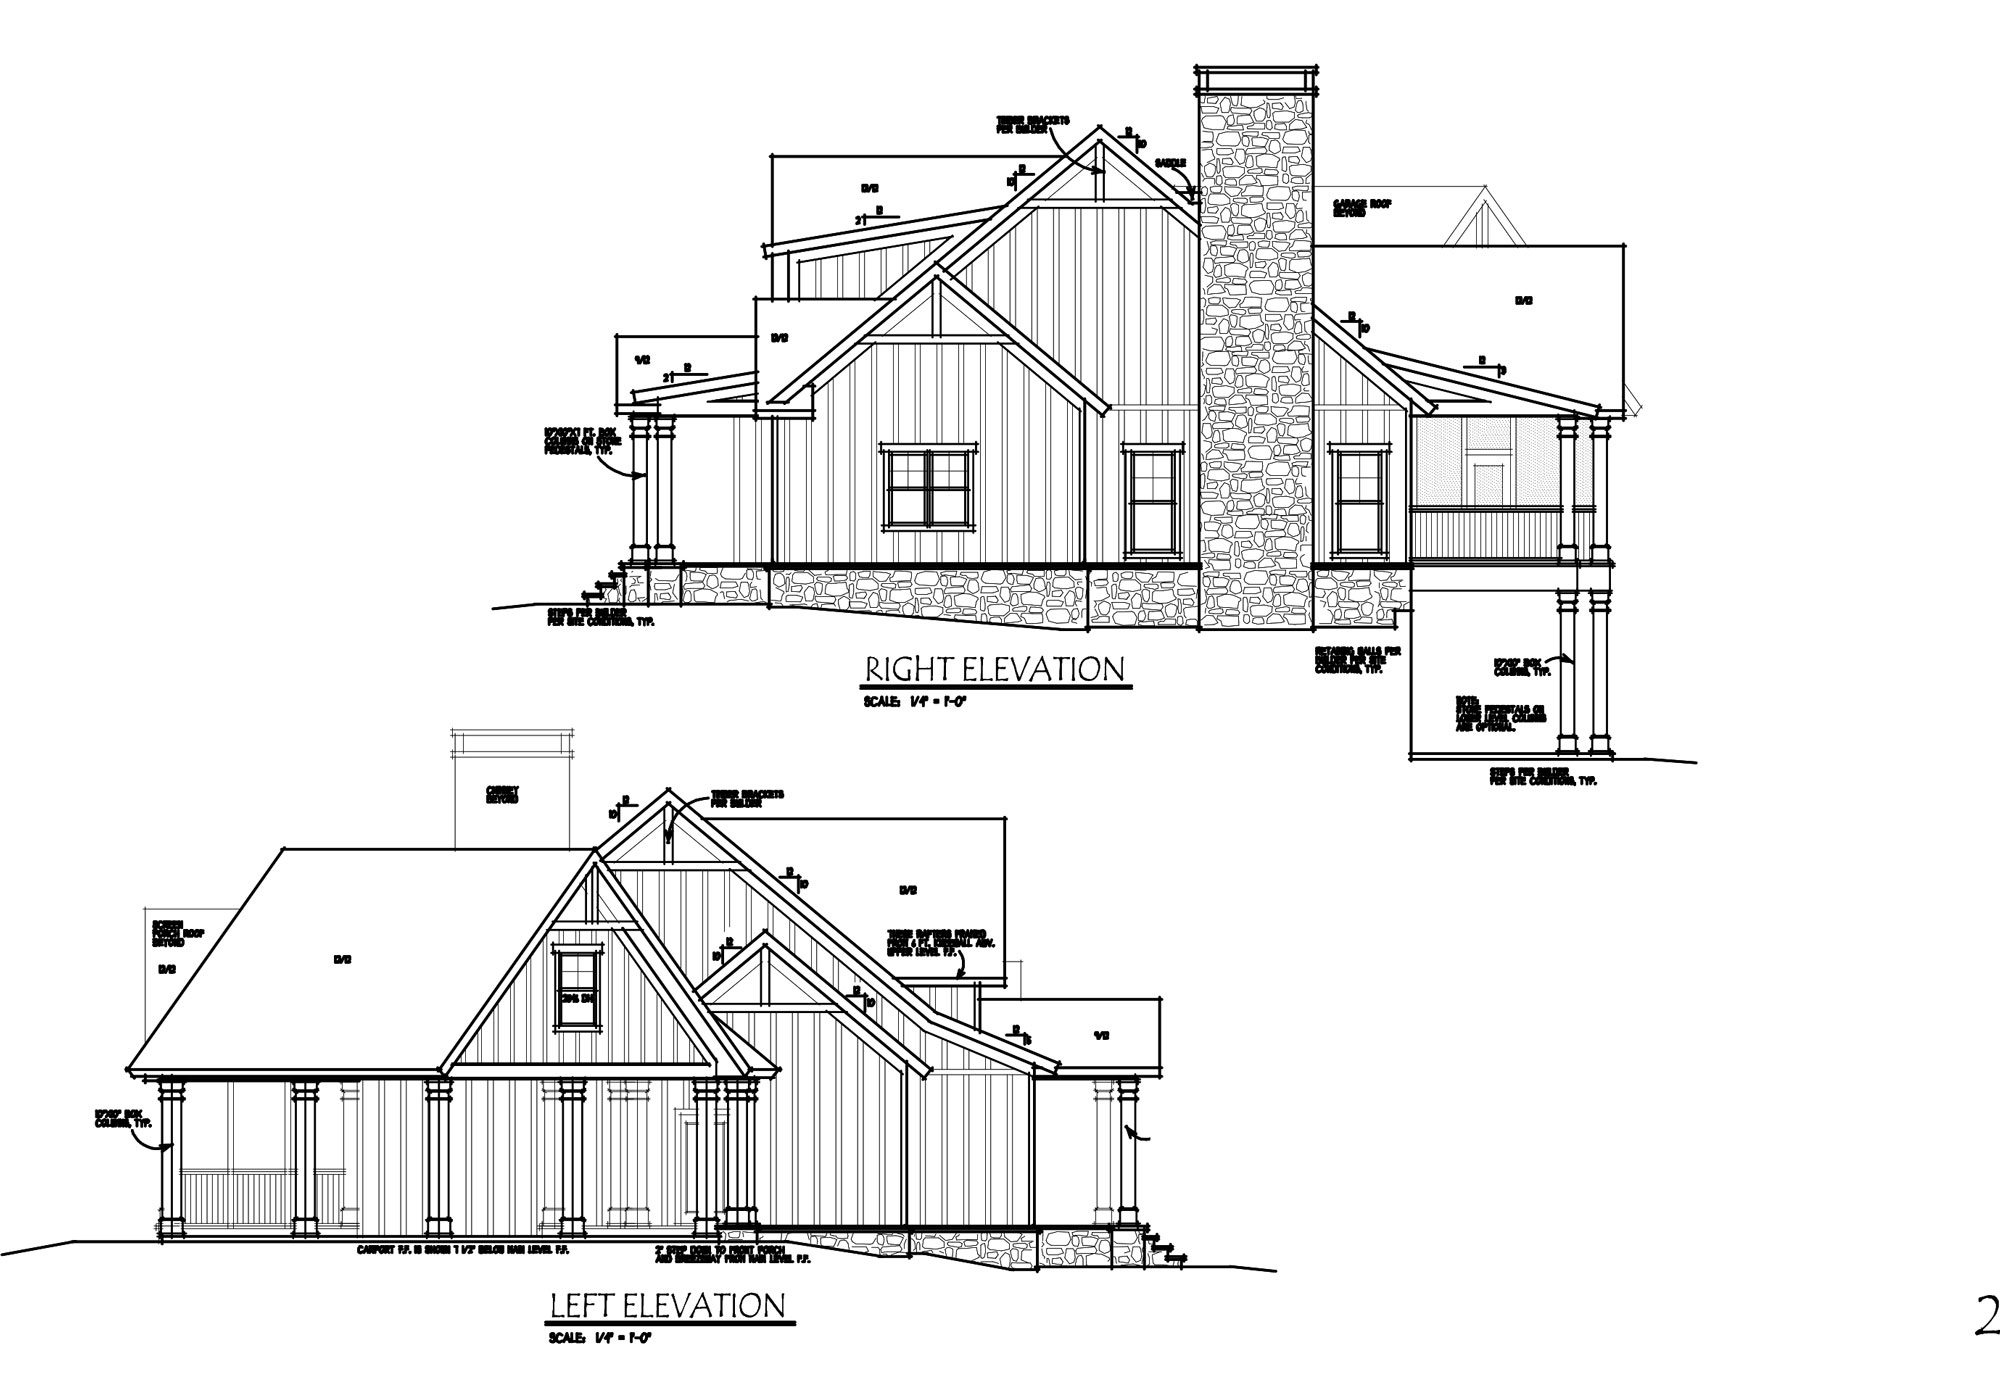  Modern  Farmhouse  House  Plan  Max  Fulbright Designs 